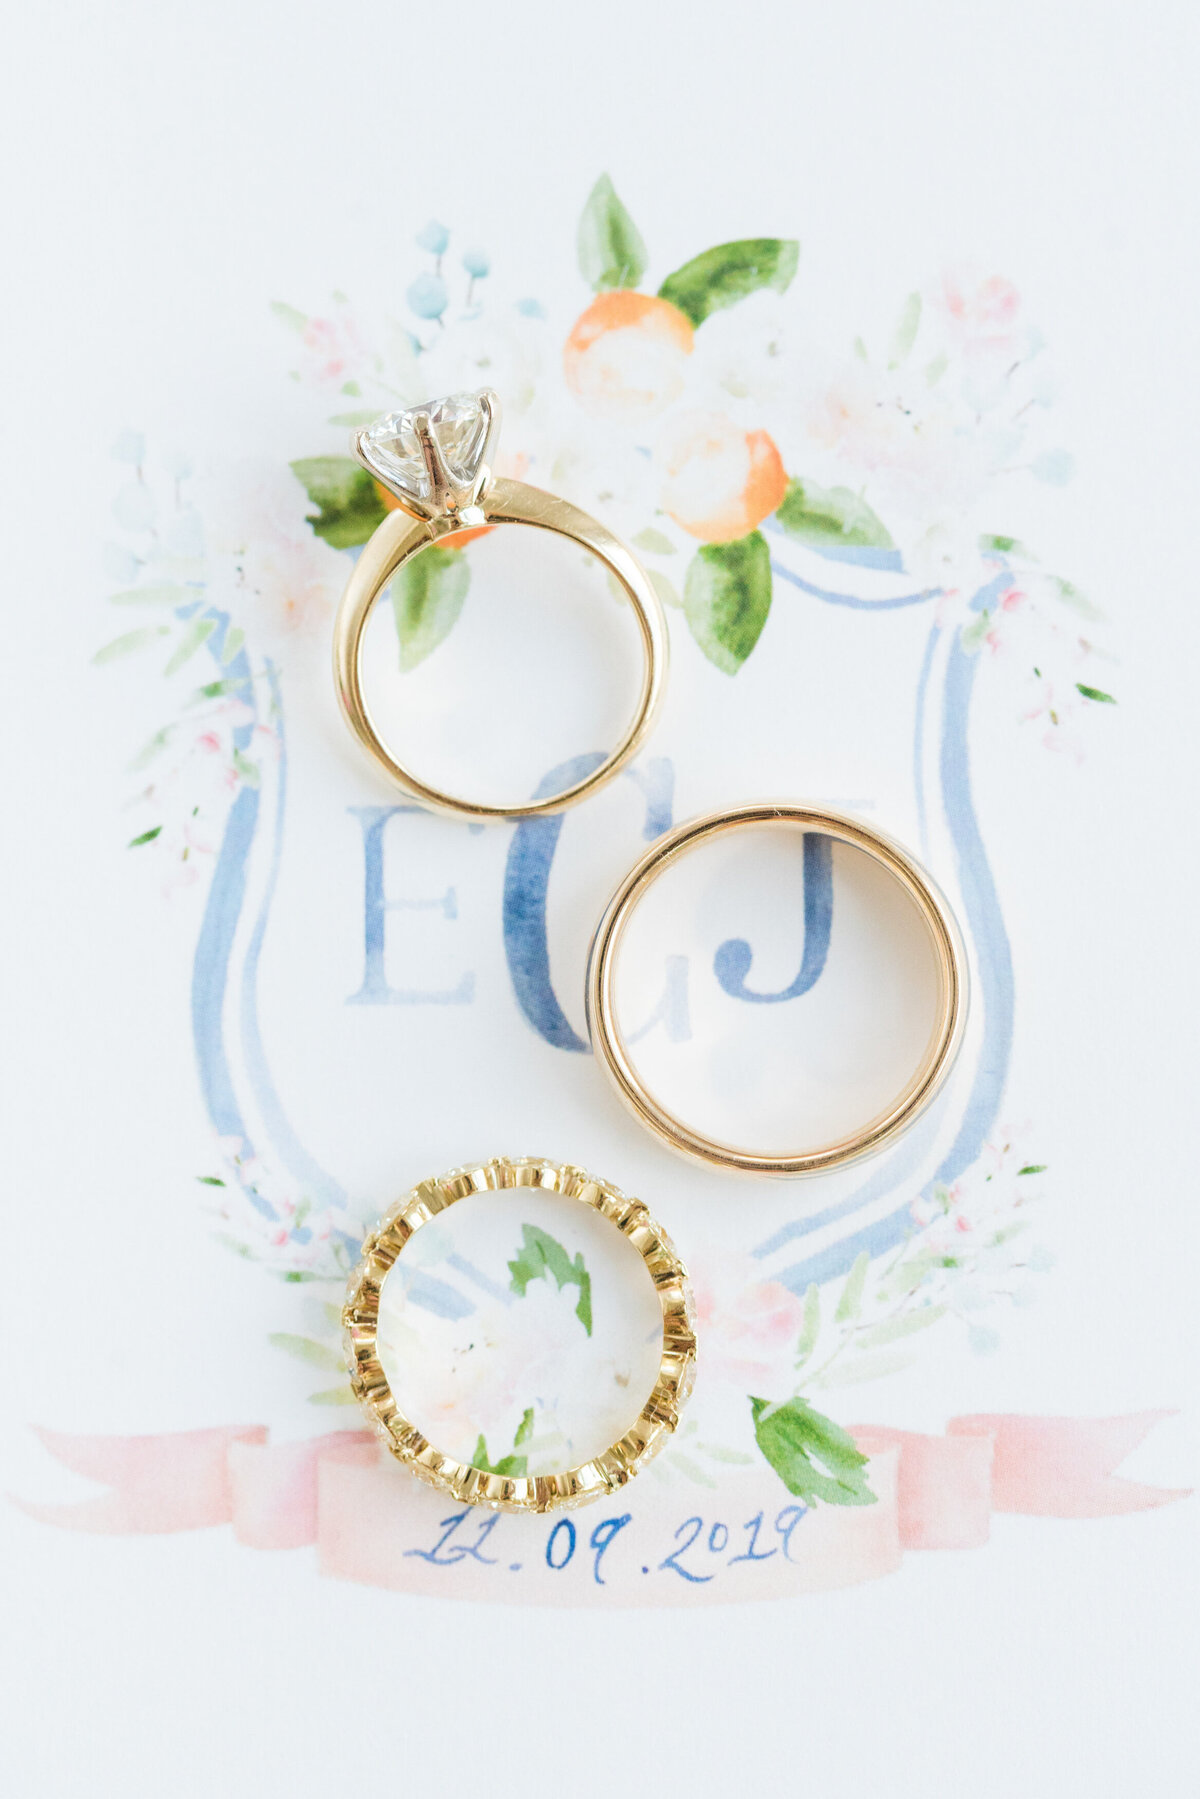 wedding rings styled on invitation crest